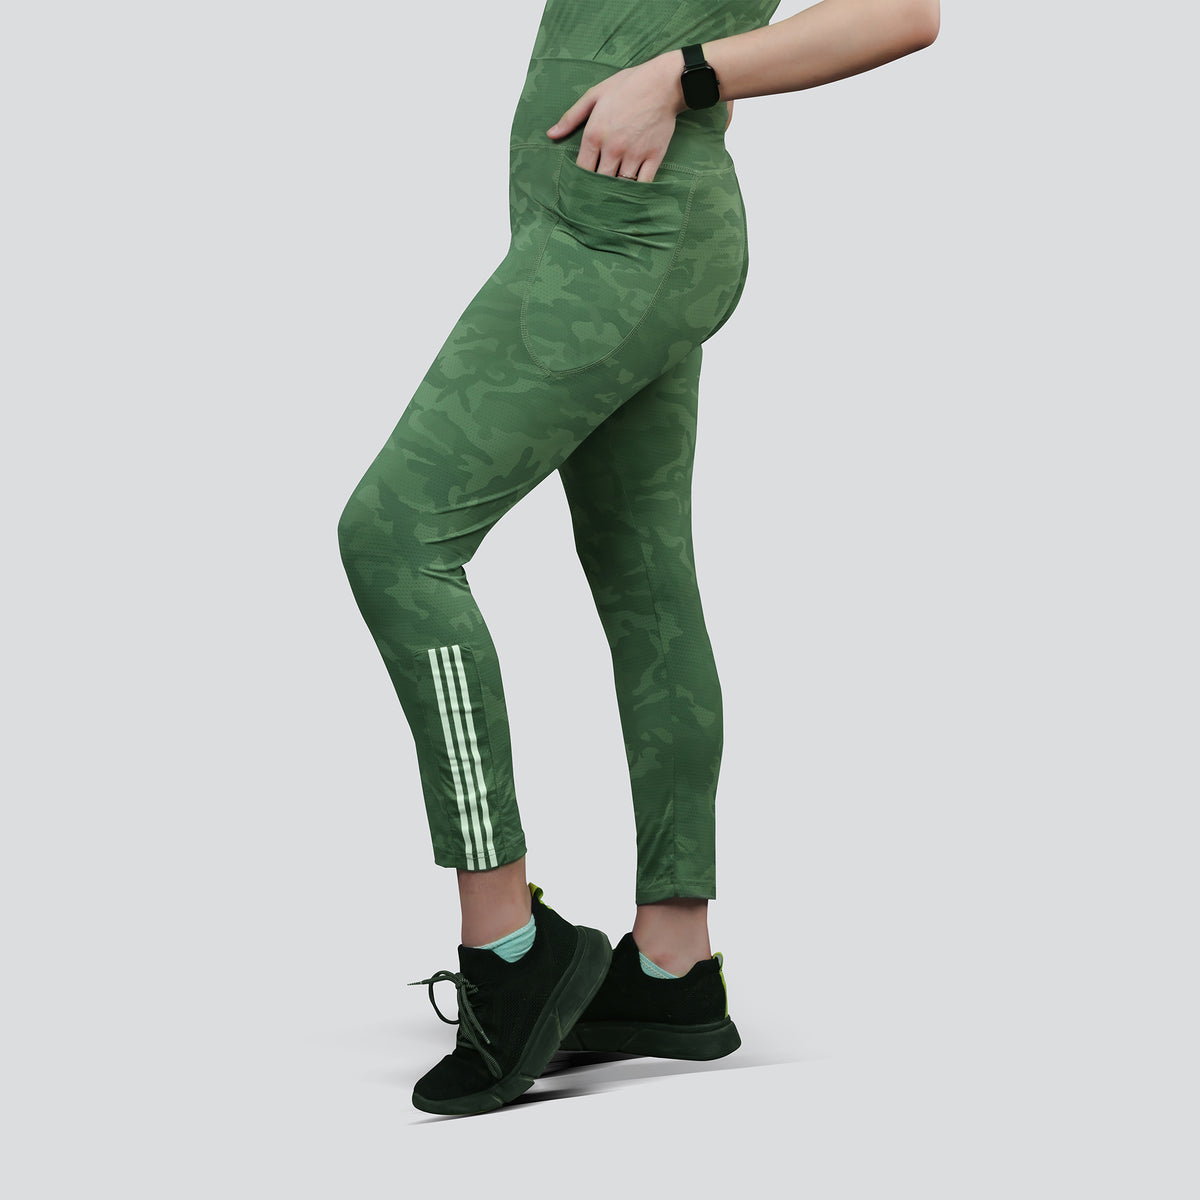 Women's Camo Workout Pants, High-Waisted Stretchable Yoga Leggings - Lime Green